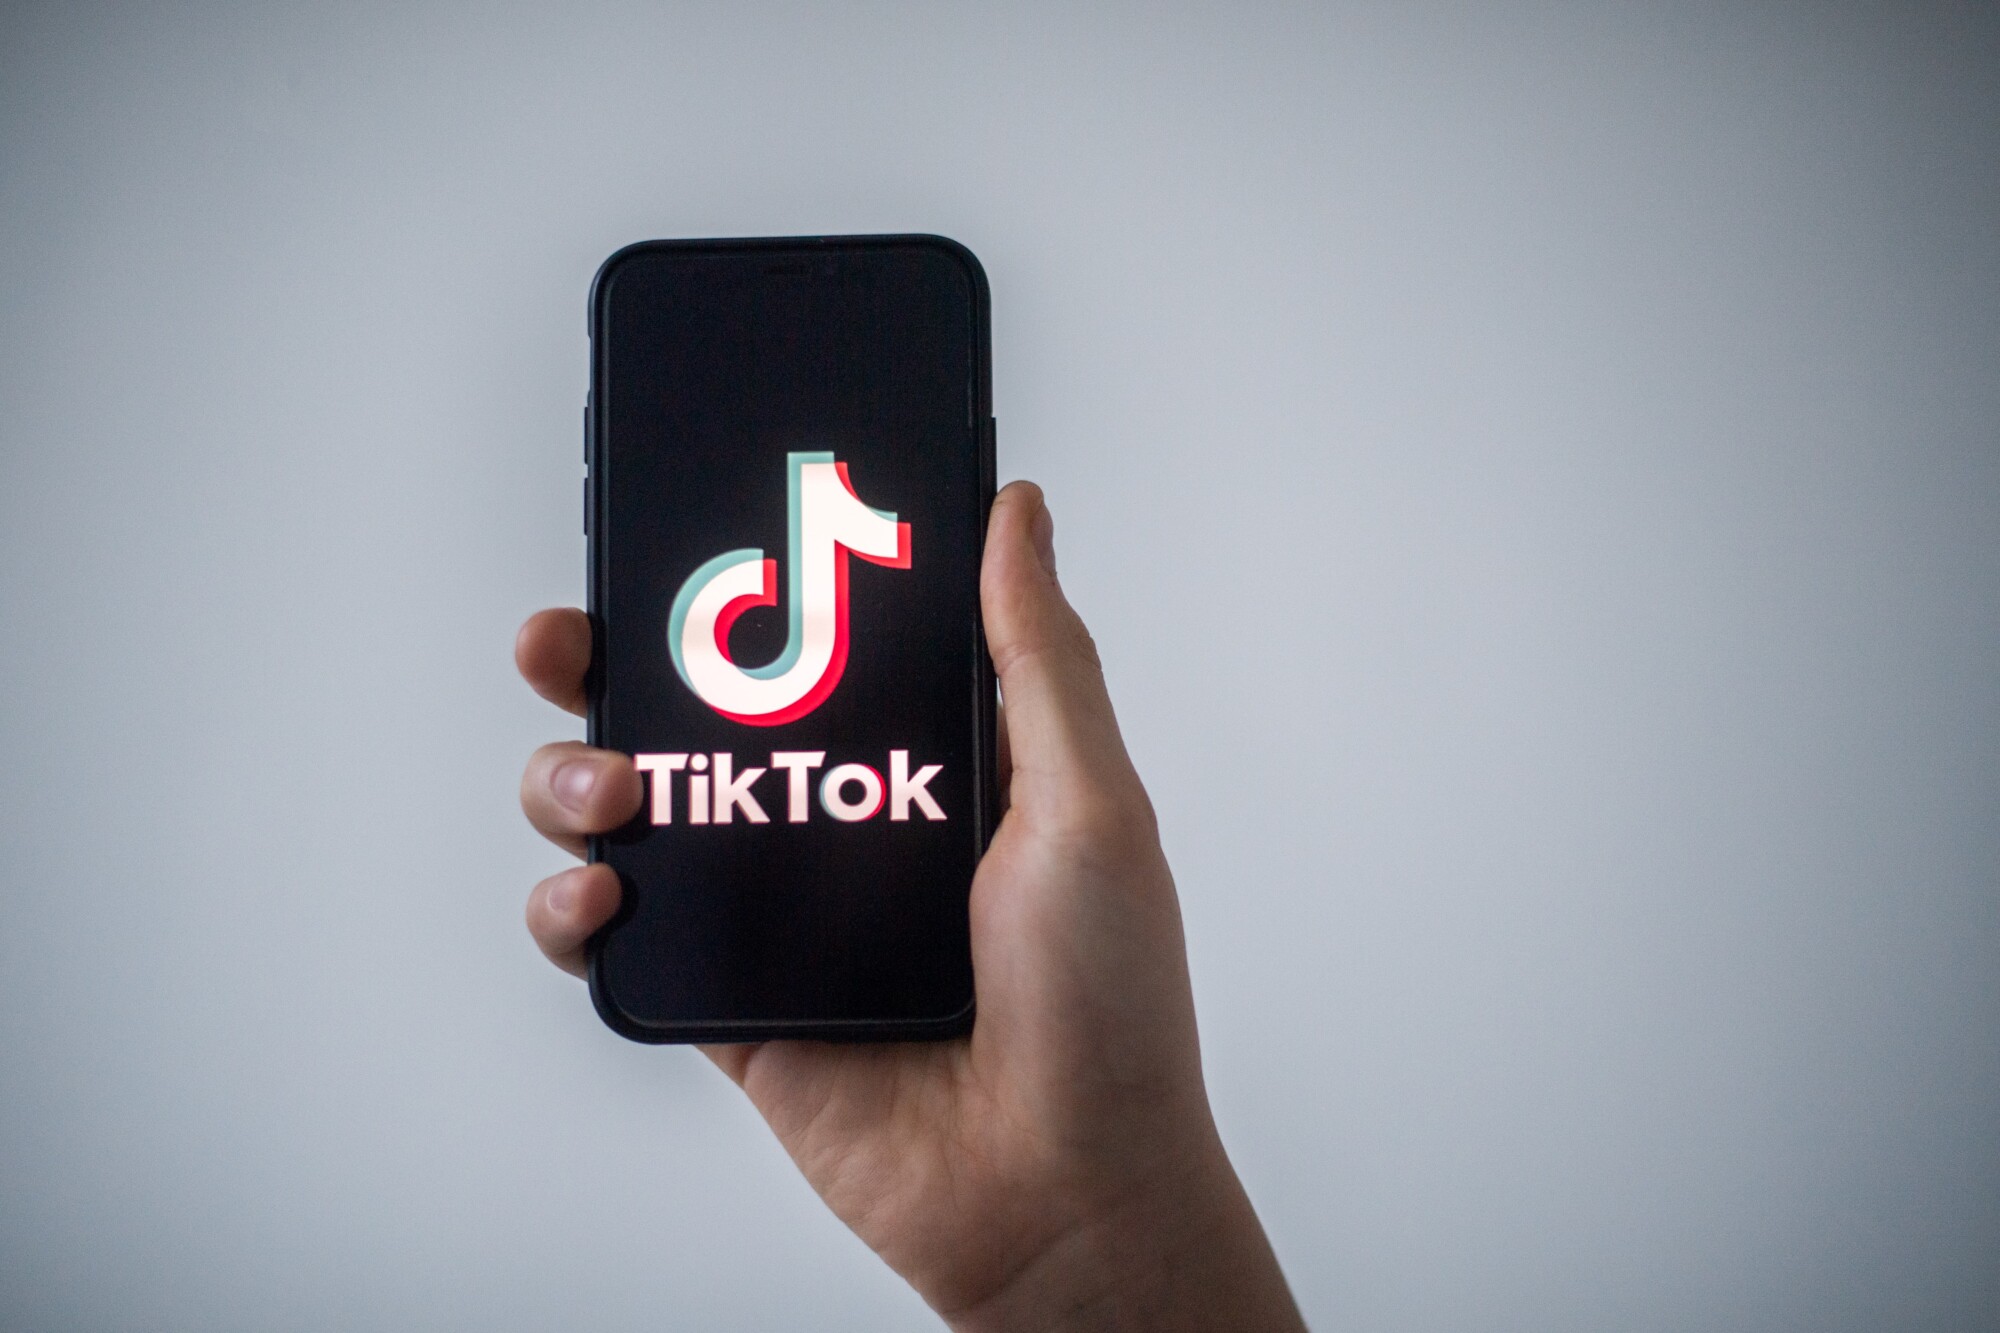 Joe Rogan Warns Americans About Using TikTok